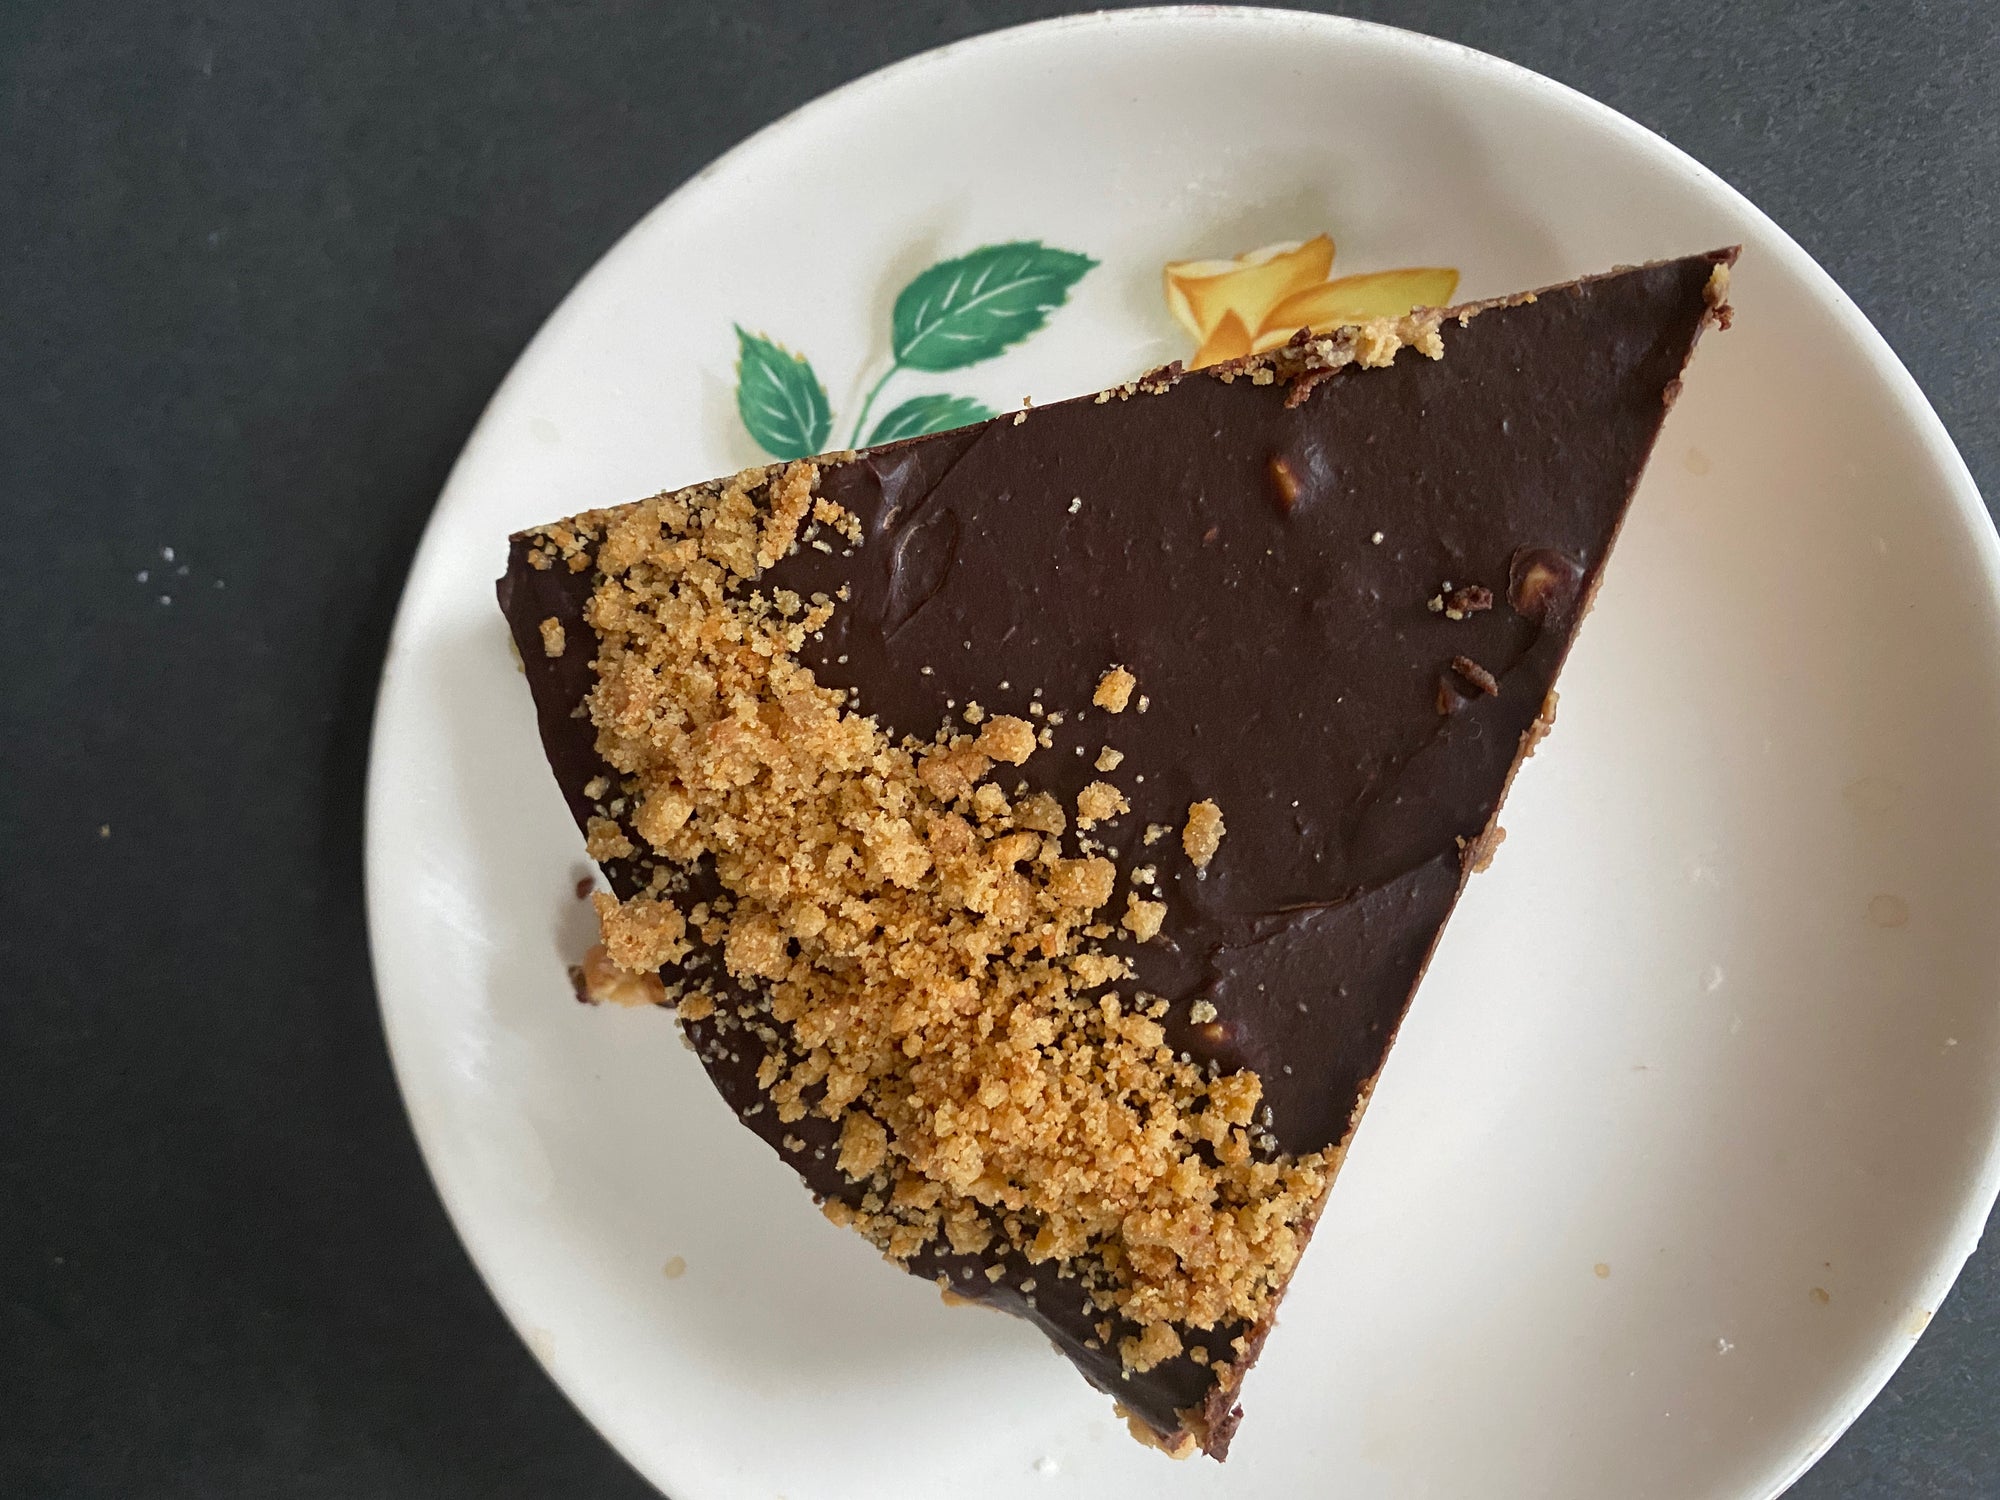 Nunbelievable Recipes: An Indulgent Chocolate Peanut Butter Pie